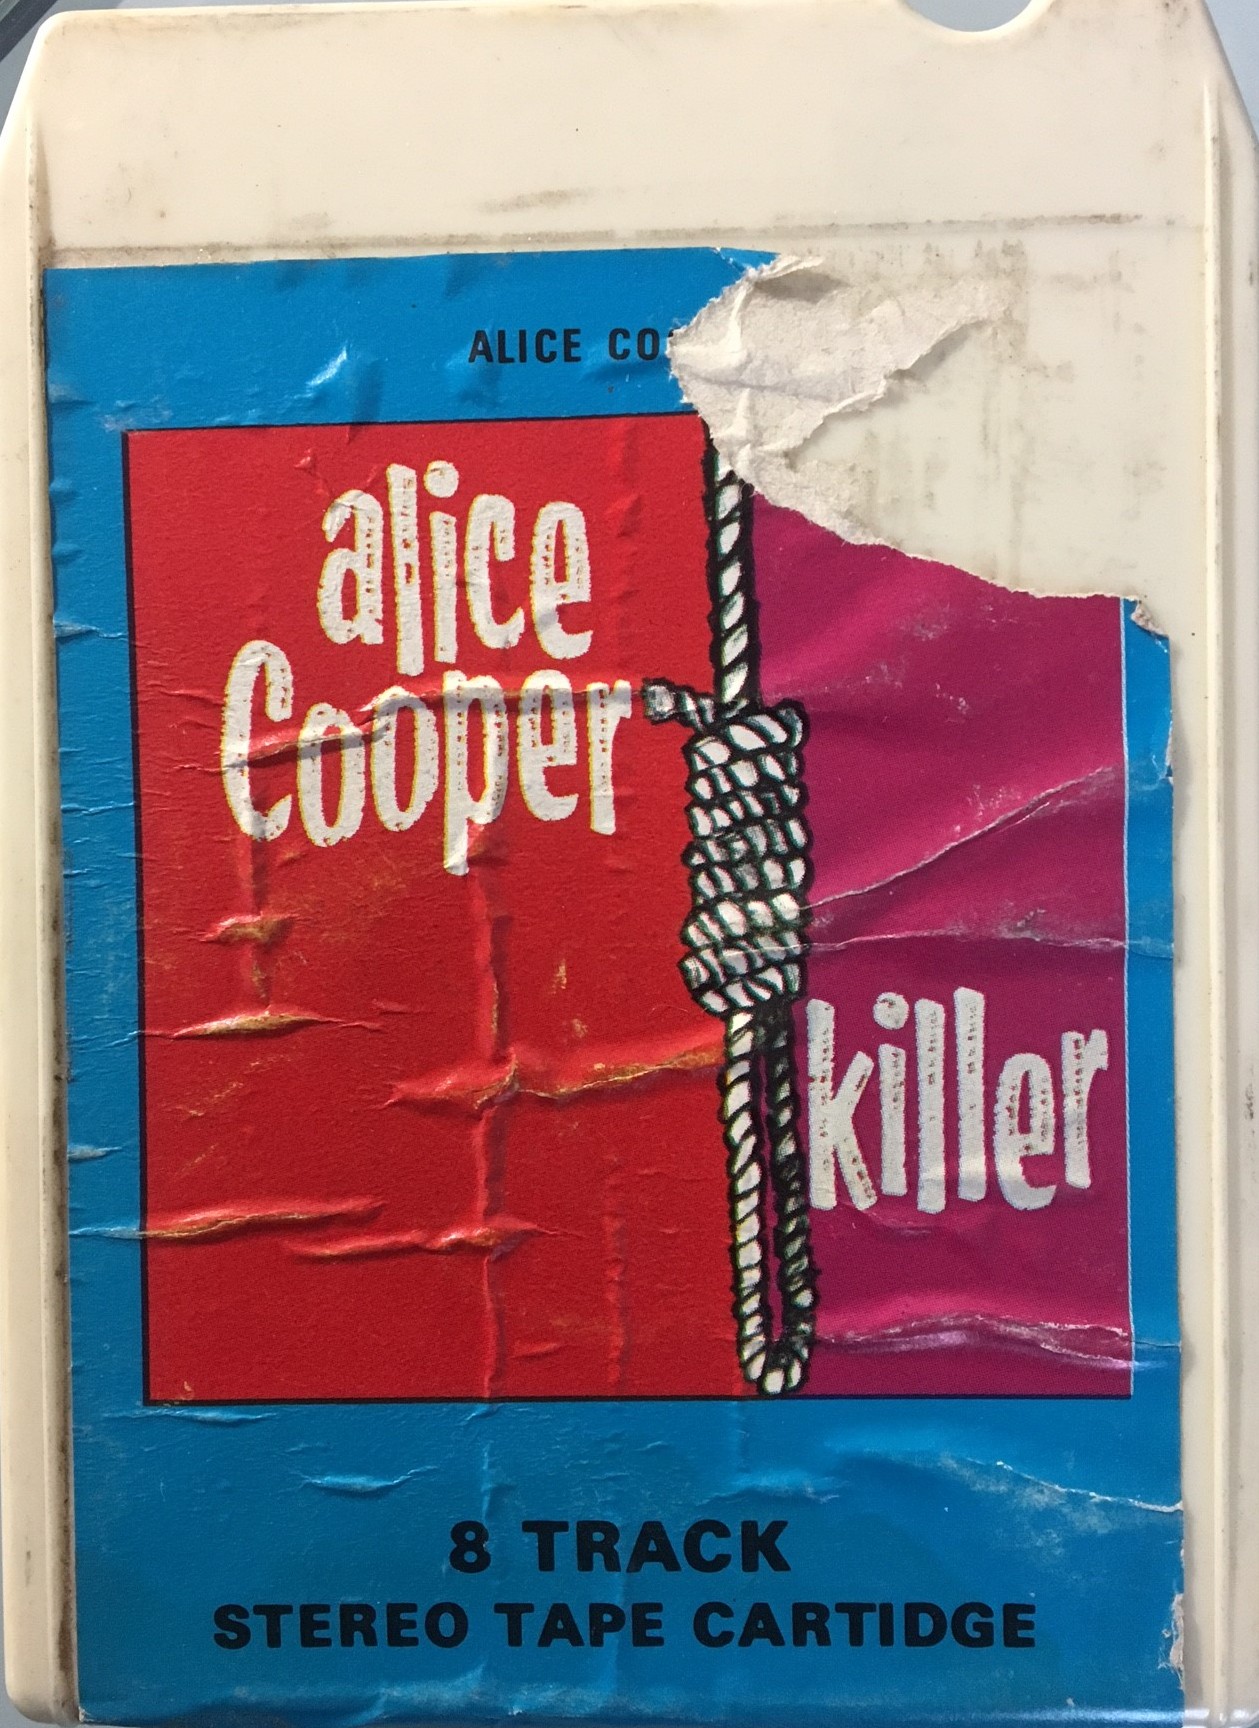 Killer - USA / 8 Track / 3855